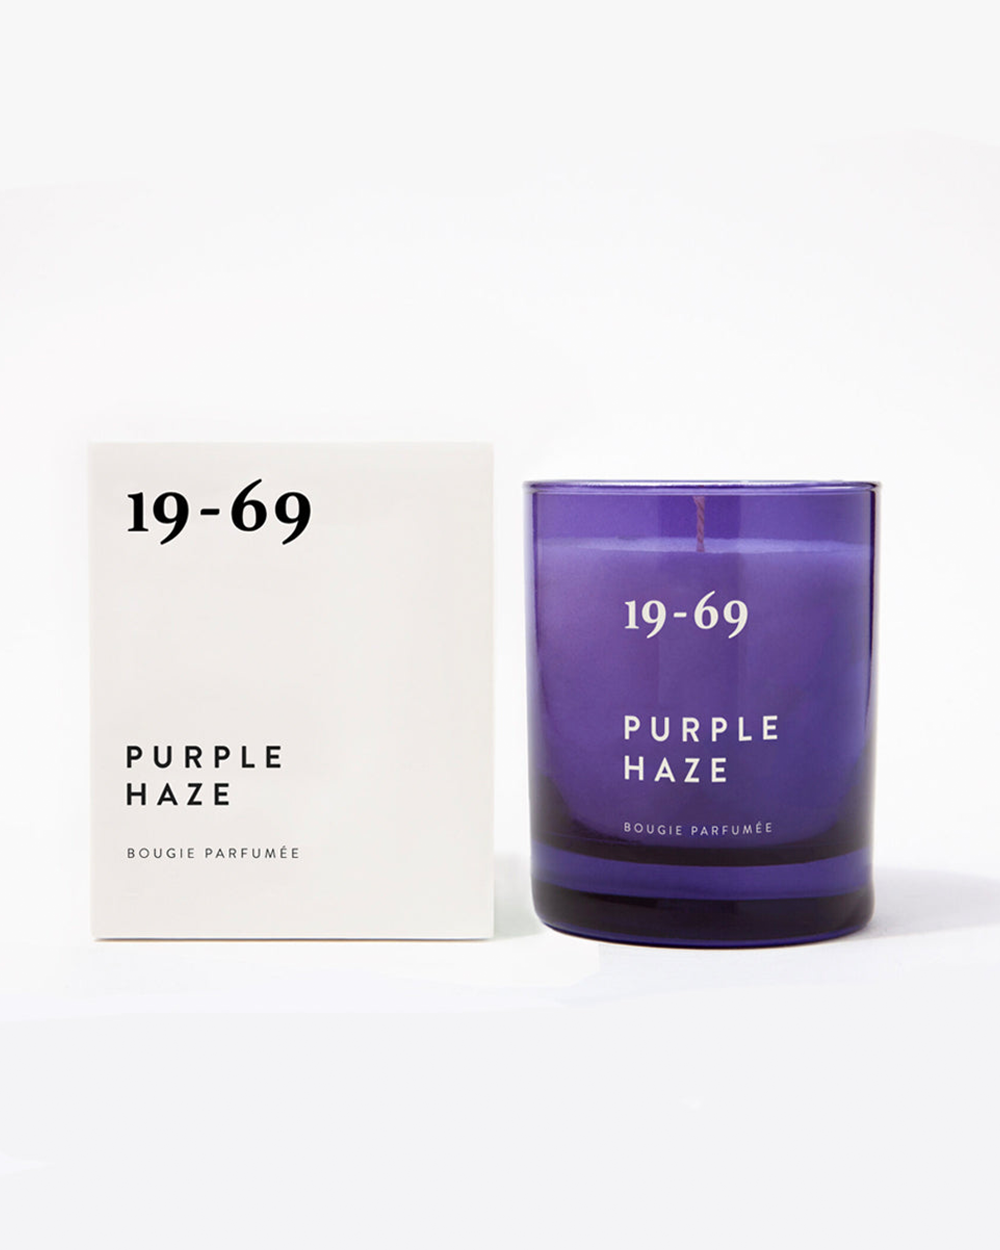 200ml Candle - Purple Haze